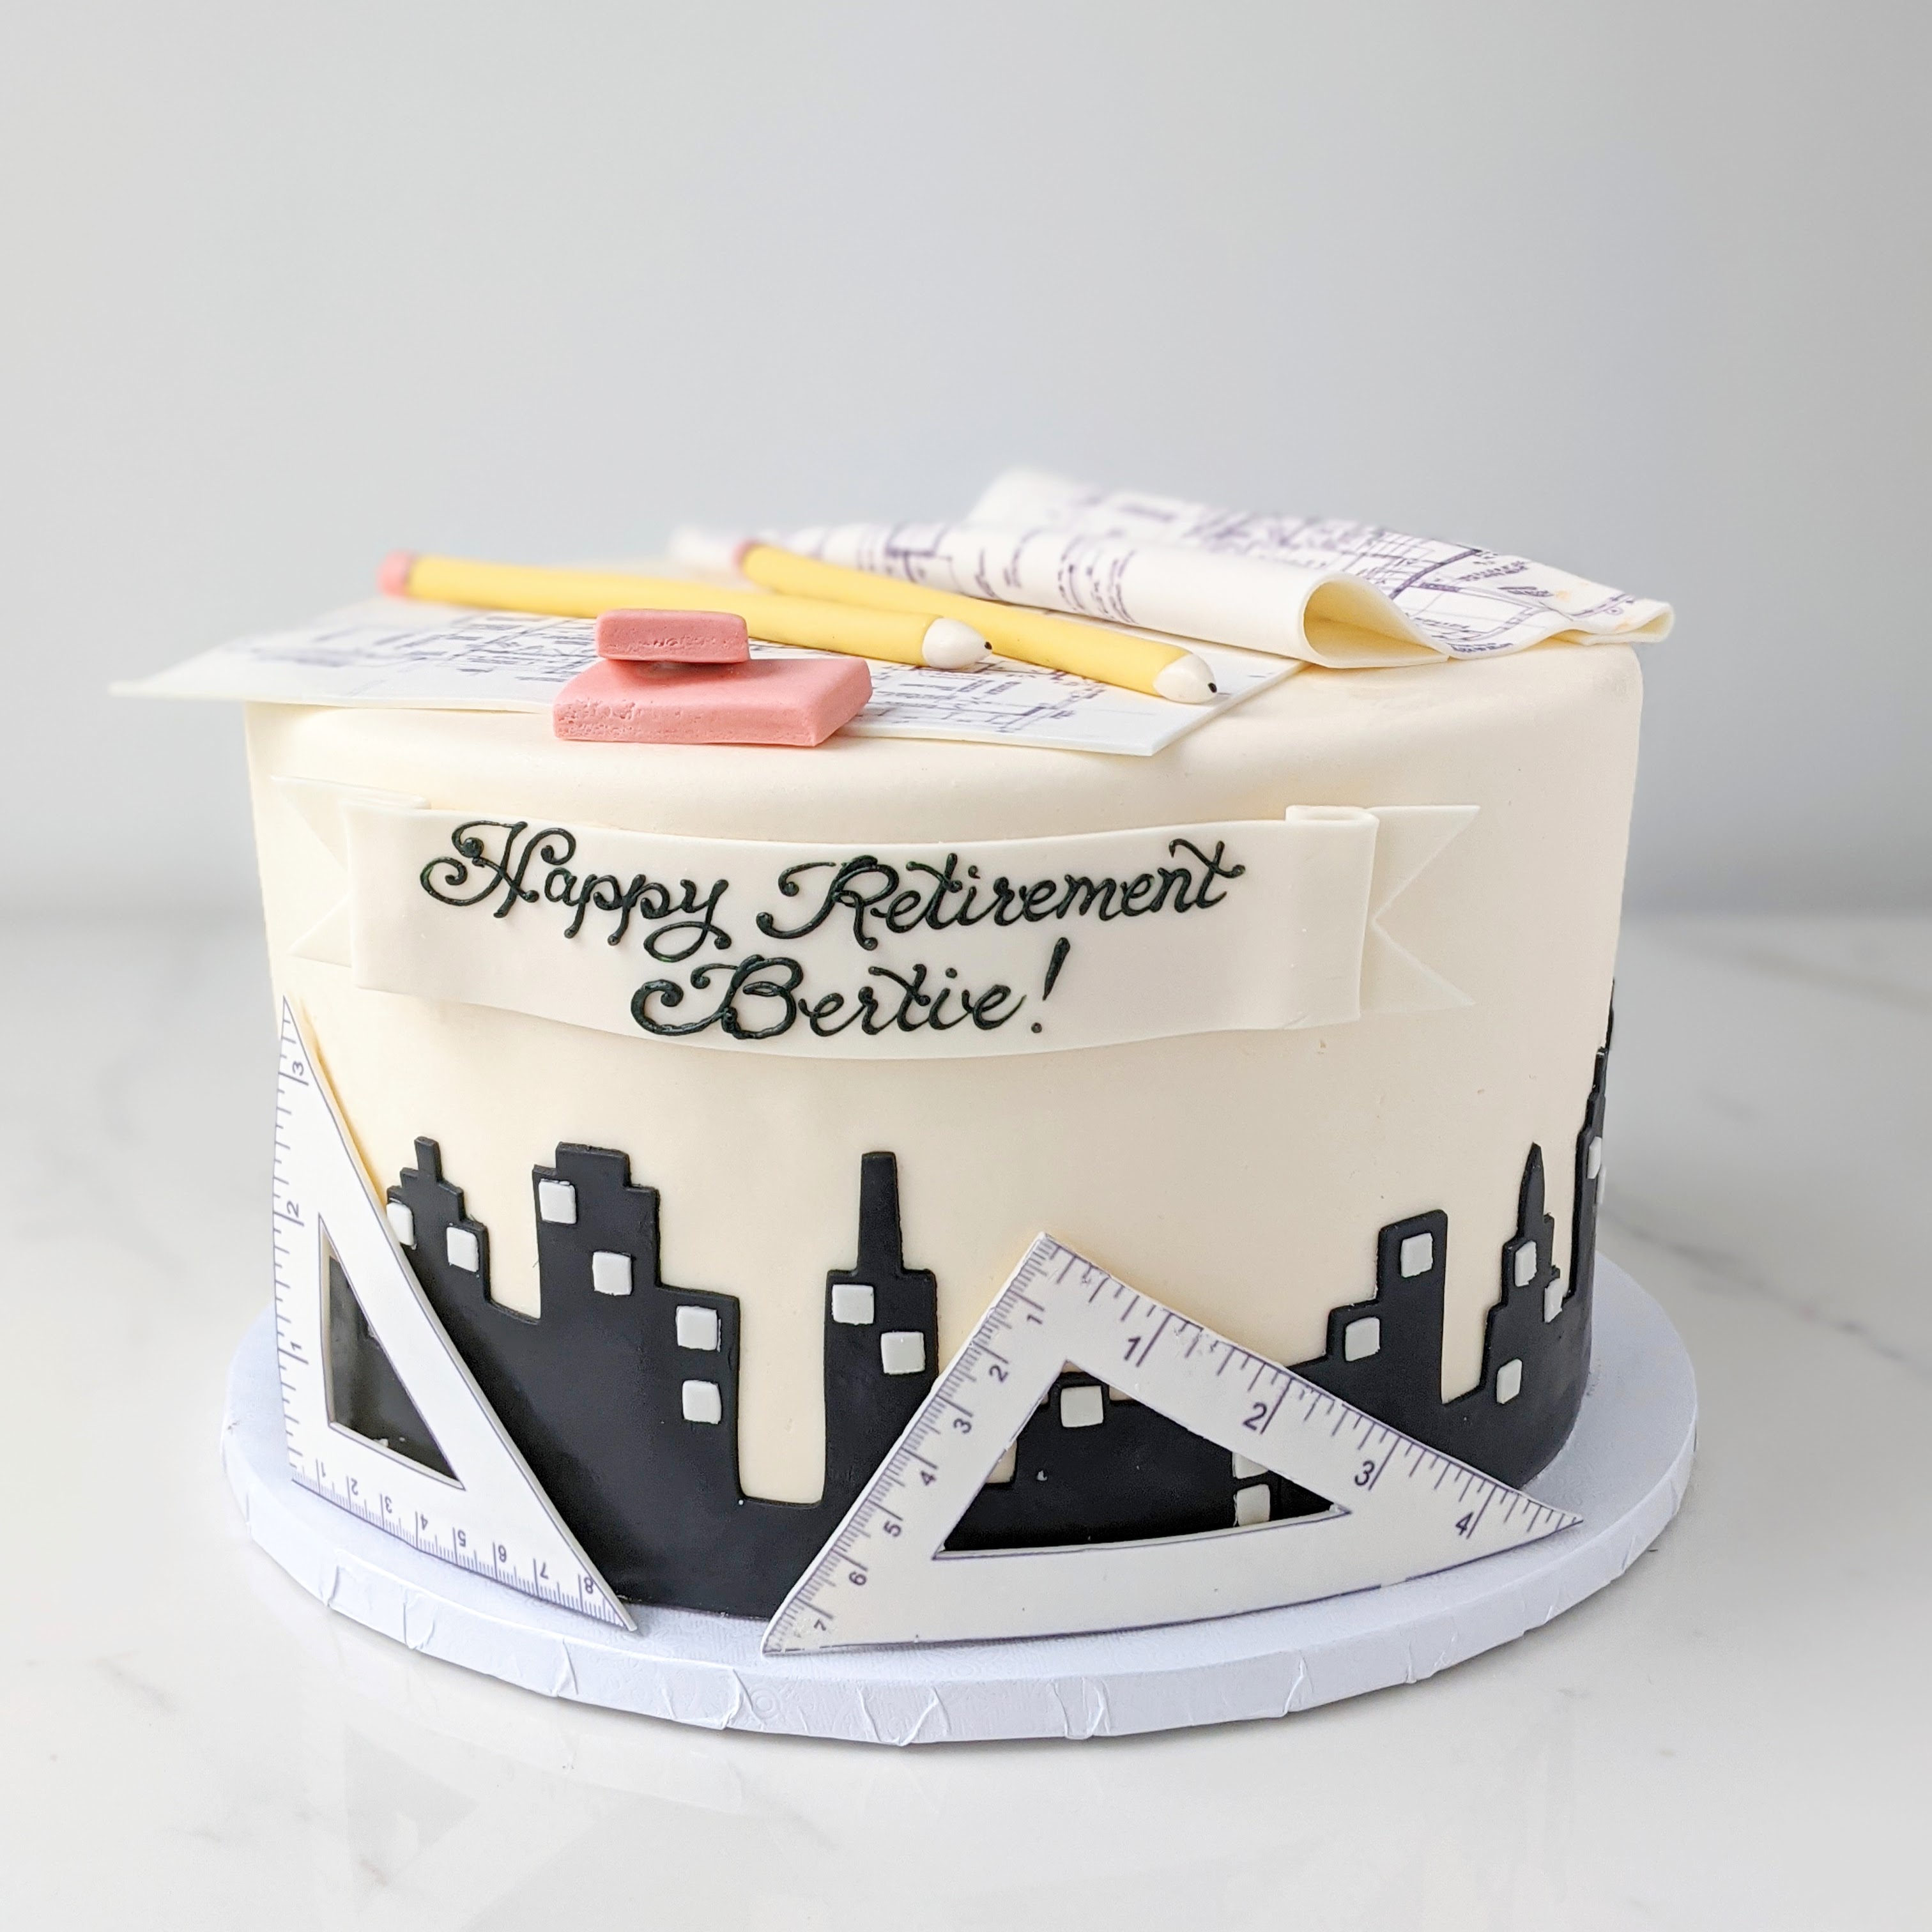 Cake for an interior designer or an architect | Cake designs birthday, Cake  decorating tutorials, Elegant birthday cakes